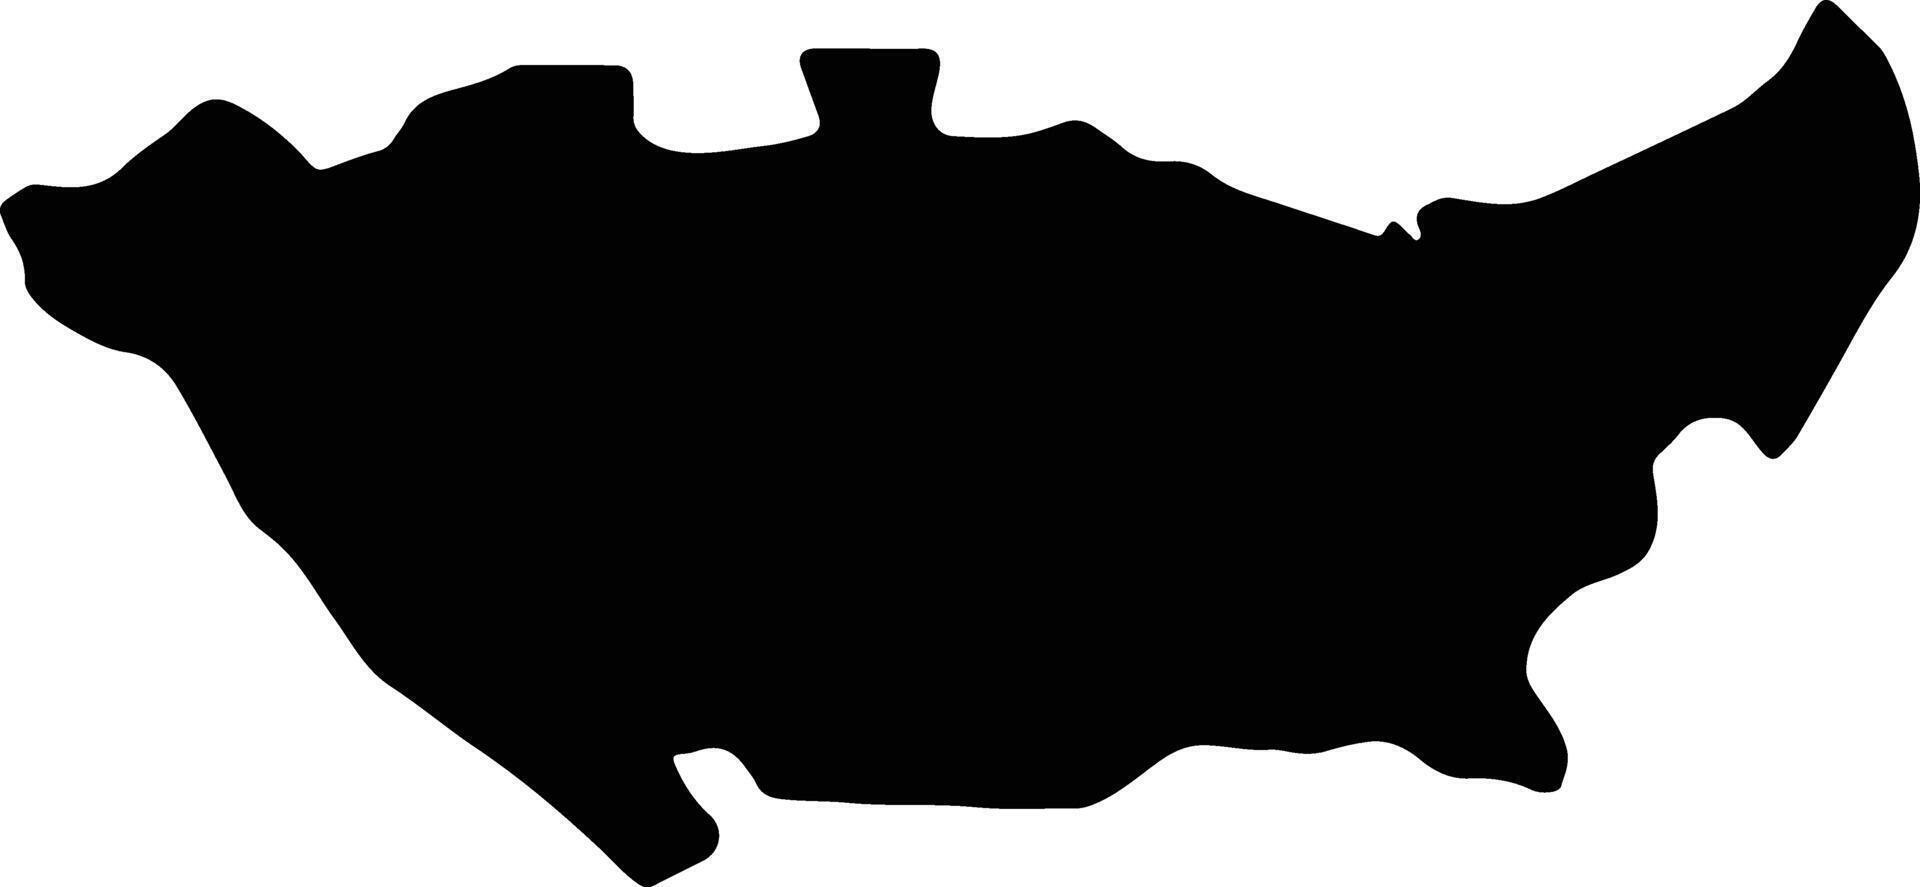 Milano Italy silhouette map vector